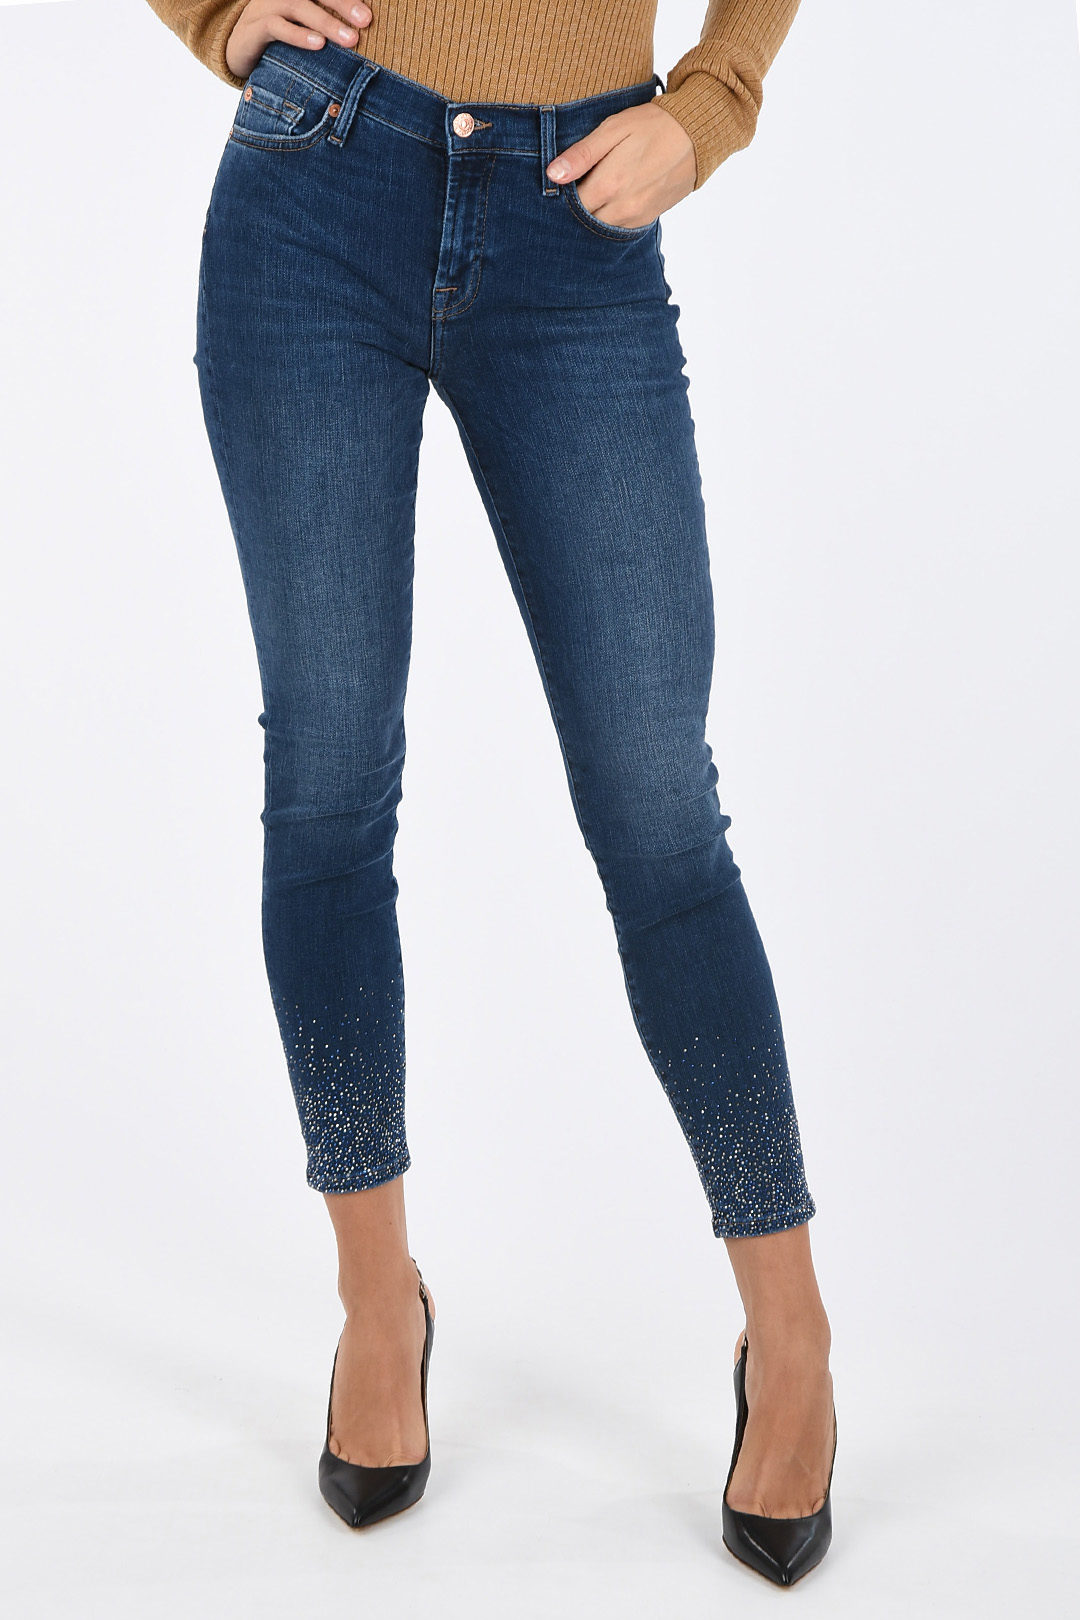 Seven7 Women's Jeans Size 4 Girlfriend Embellished Studded Distressed Blue  Denim